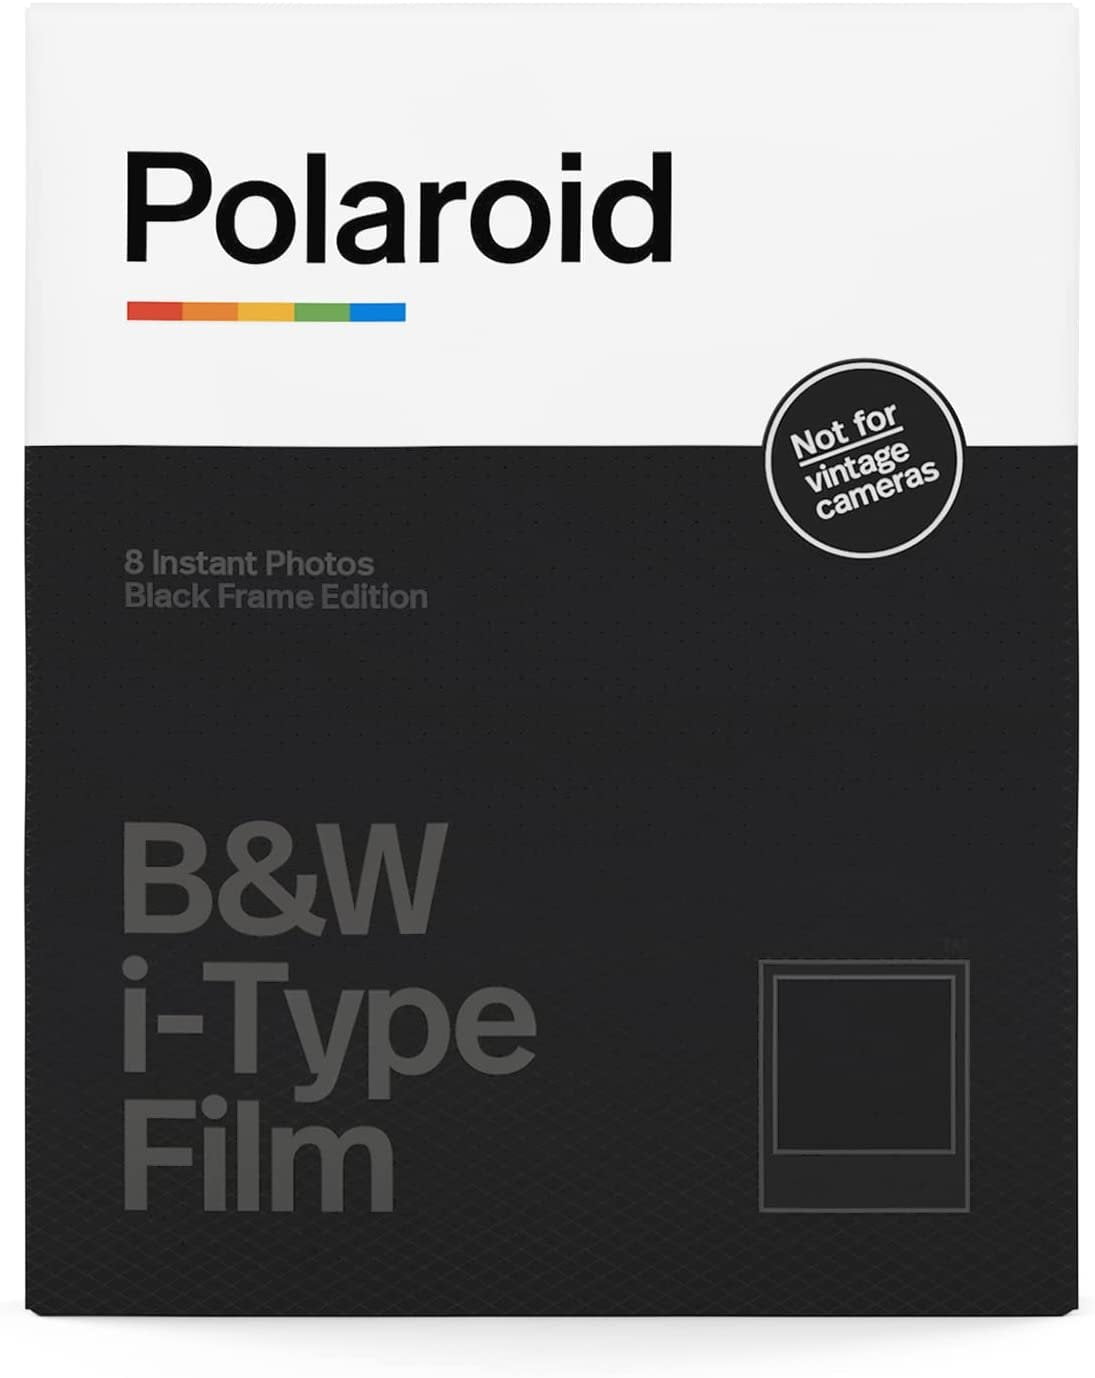 Black Frame Film B&W Film 6182 32 Photos Polaroid I-Type Film Variety Pack I-Type Color Film 